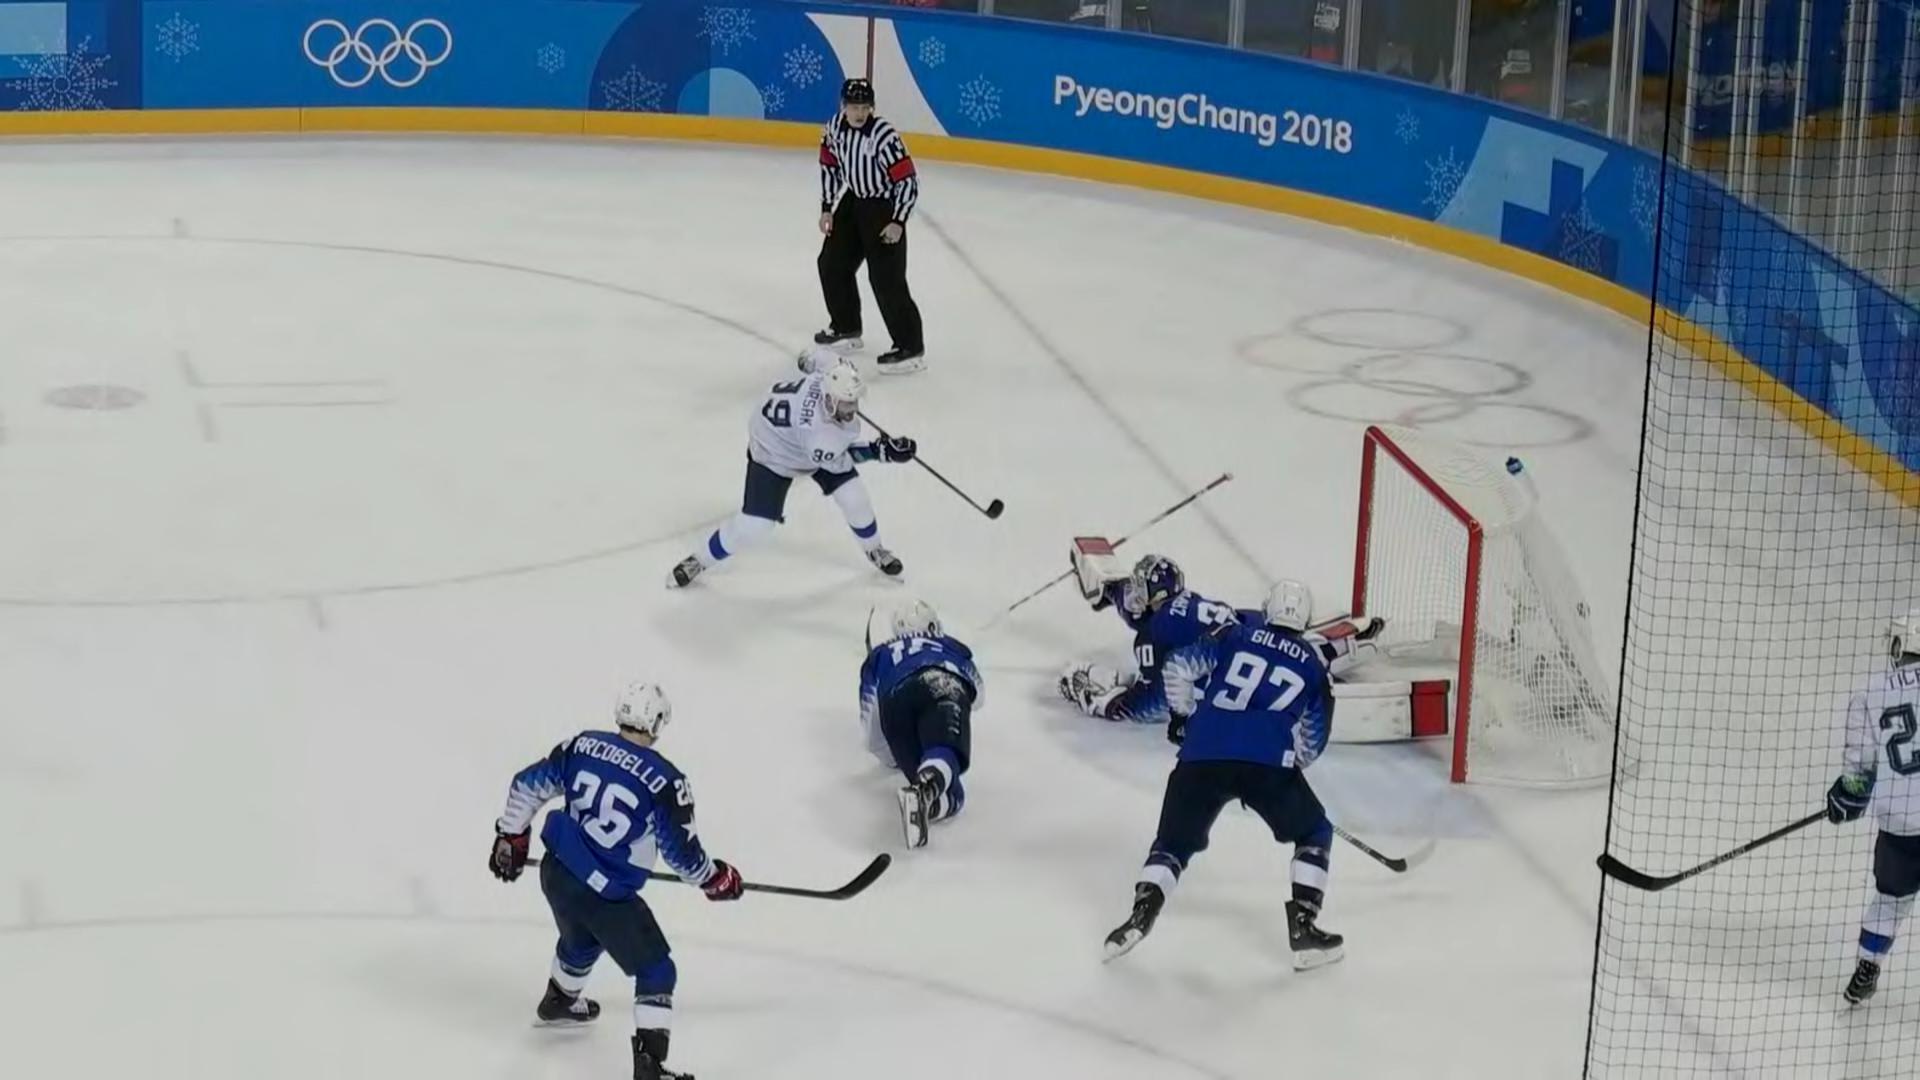 How to watch hockey at Beijing 2022 Olympics